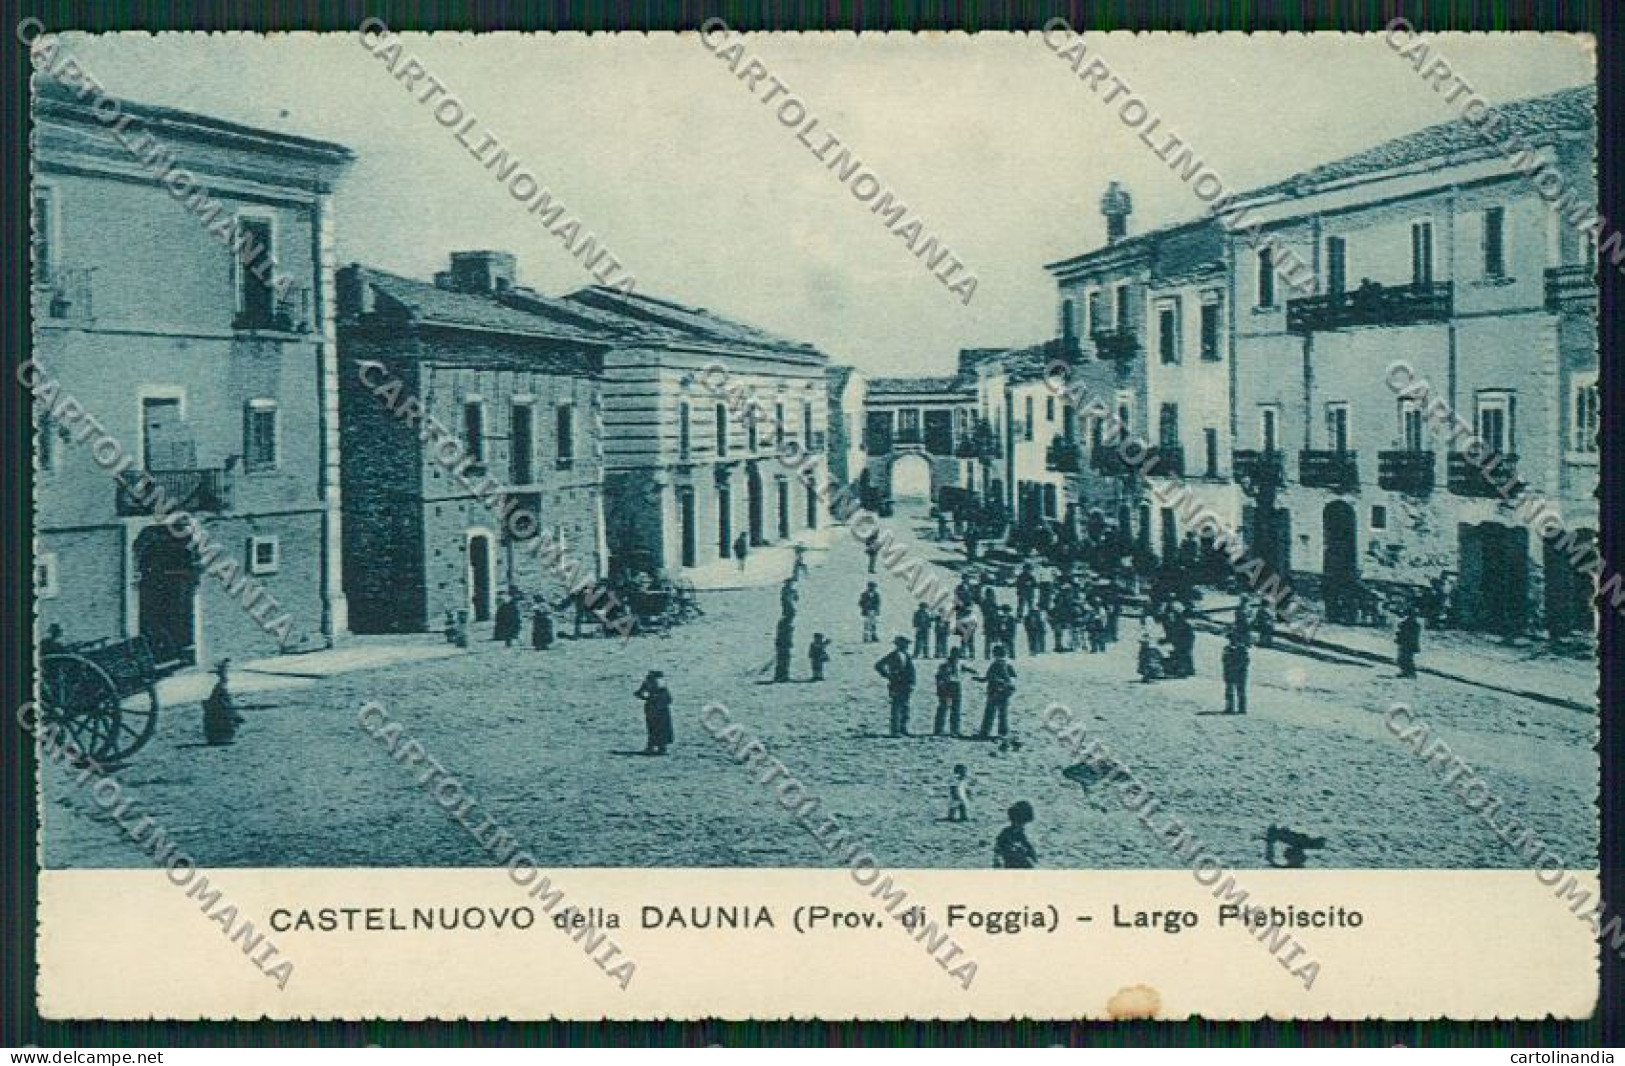 Foggia Castelnuovo Daunia Cartolina QQ4909 - Foggia